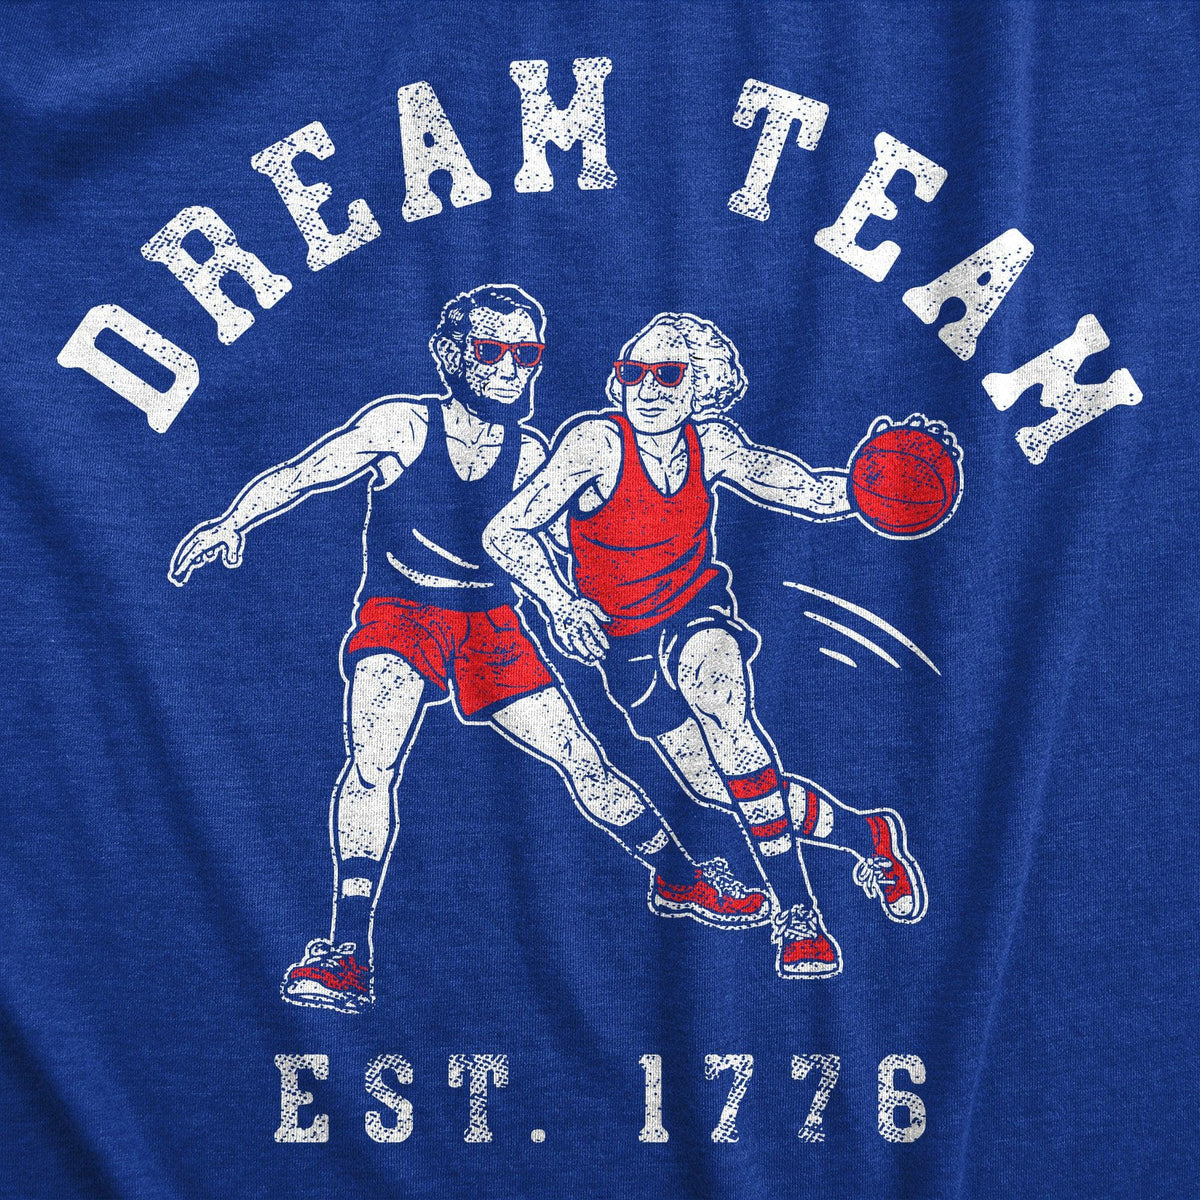 Dream Team 1776 Women&#39;s Tshirt  -  Crazy Dog T-Shirts